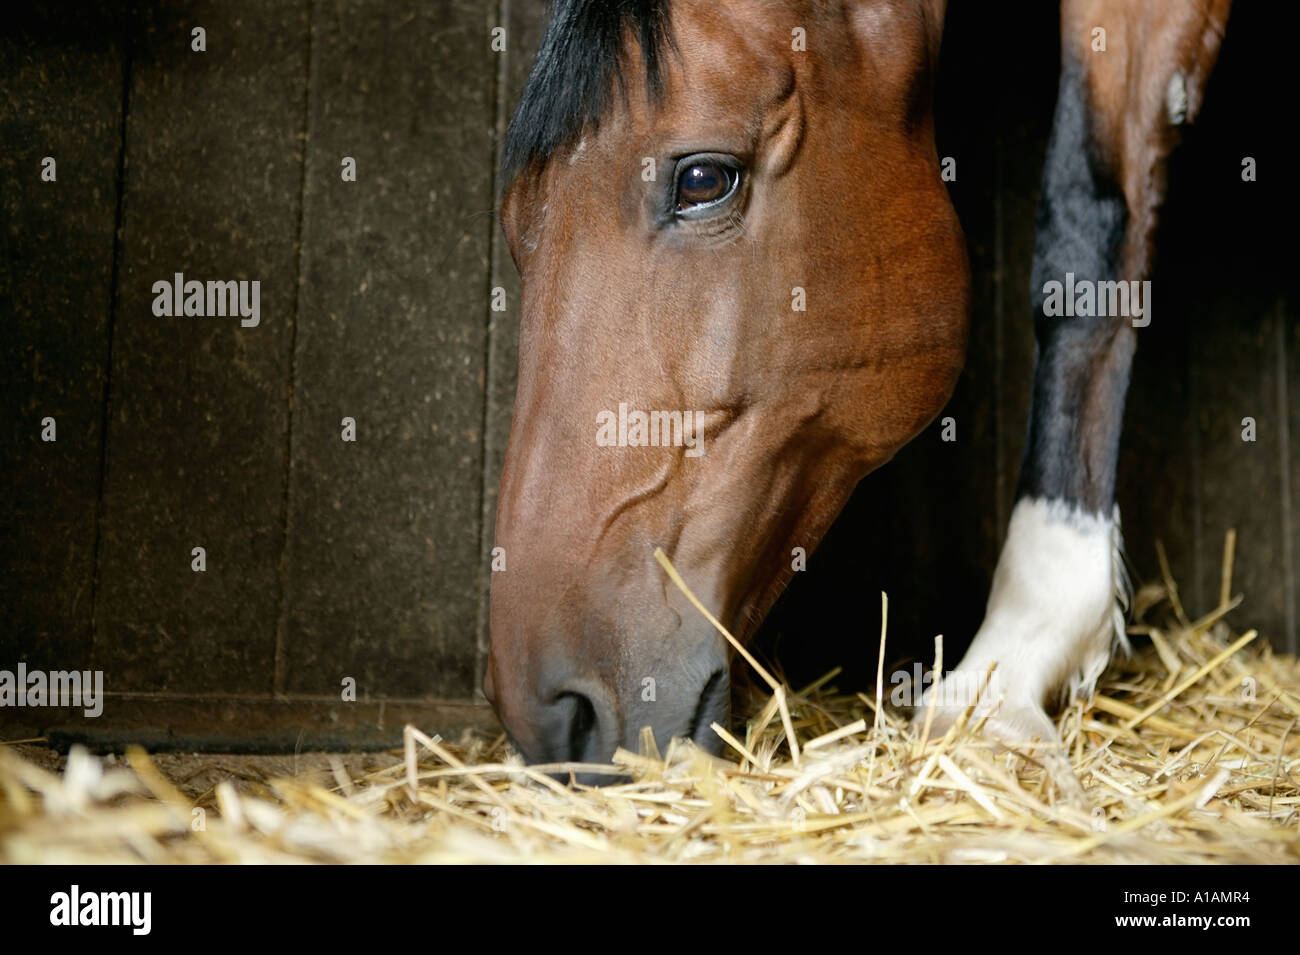 A bay horse eating hay Stock Photo